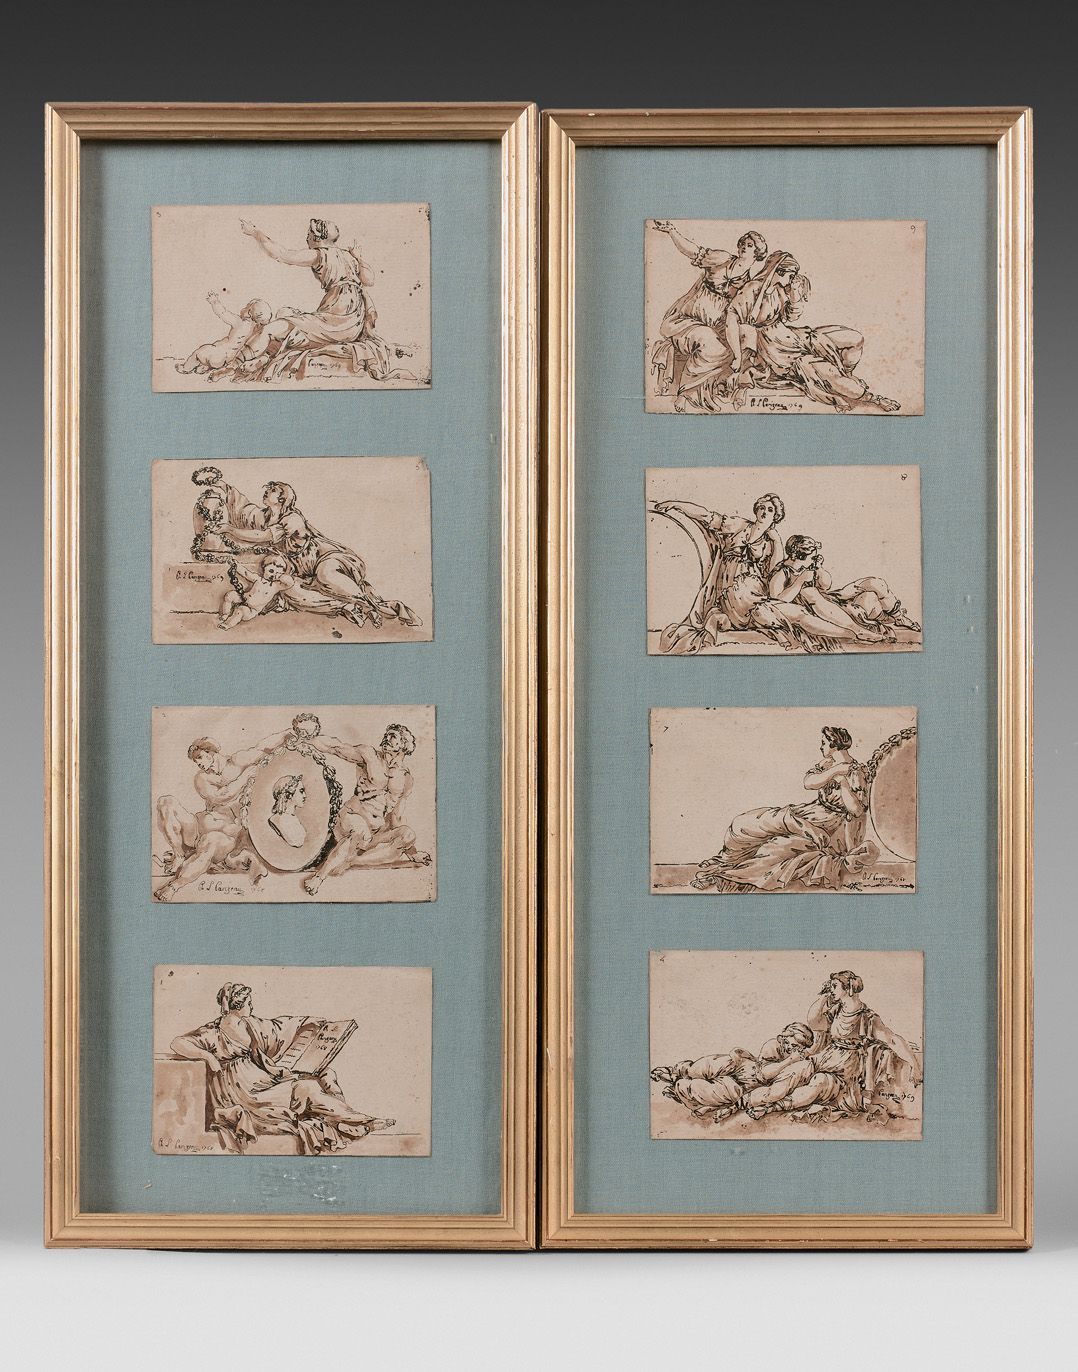 Null 菲利普-路易-帕里索 (1740-1801)

数字的研究

八幅黑墨水和棕褐色水墨画。

七个签名，日期为1768年或1769年。

呈现在玻璃下的&hellip;